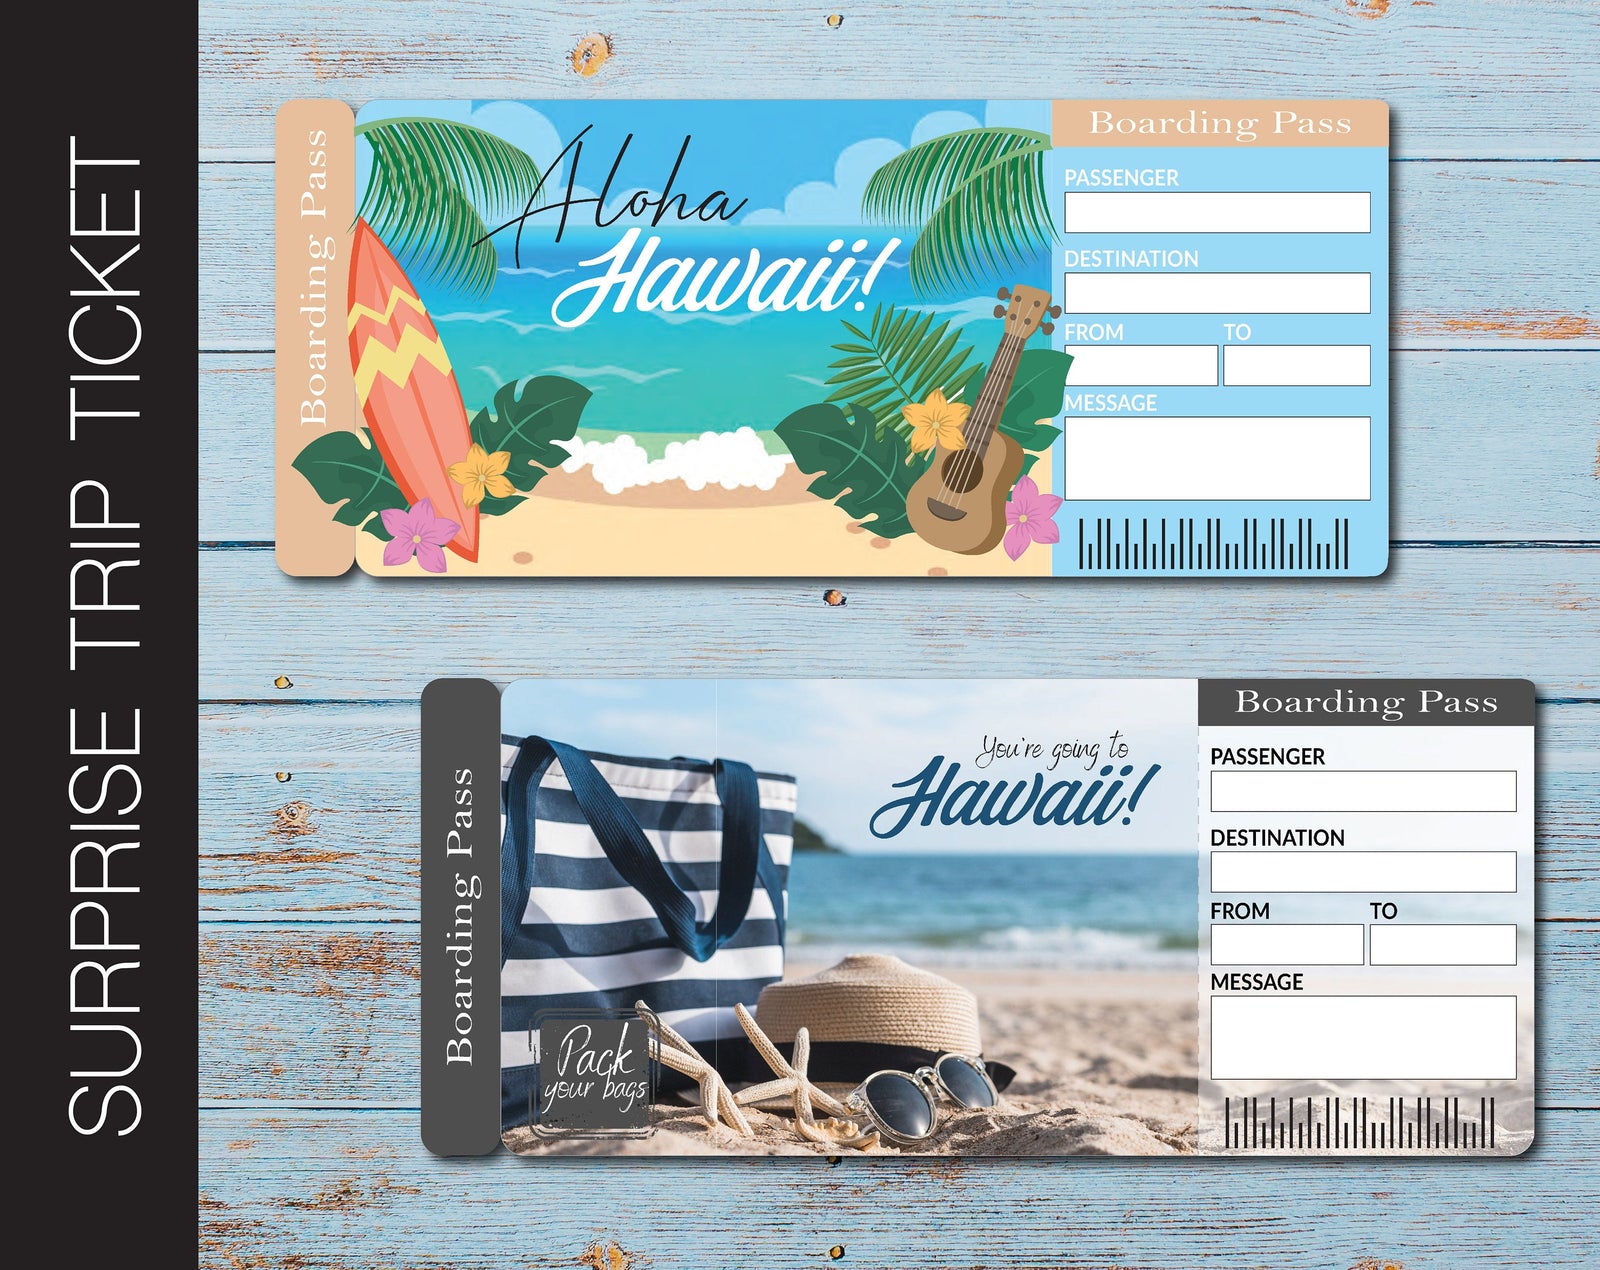 hawaii tickets round trip cheap